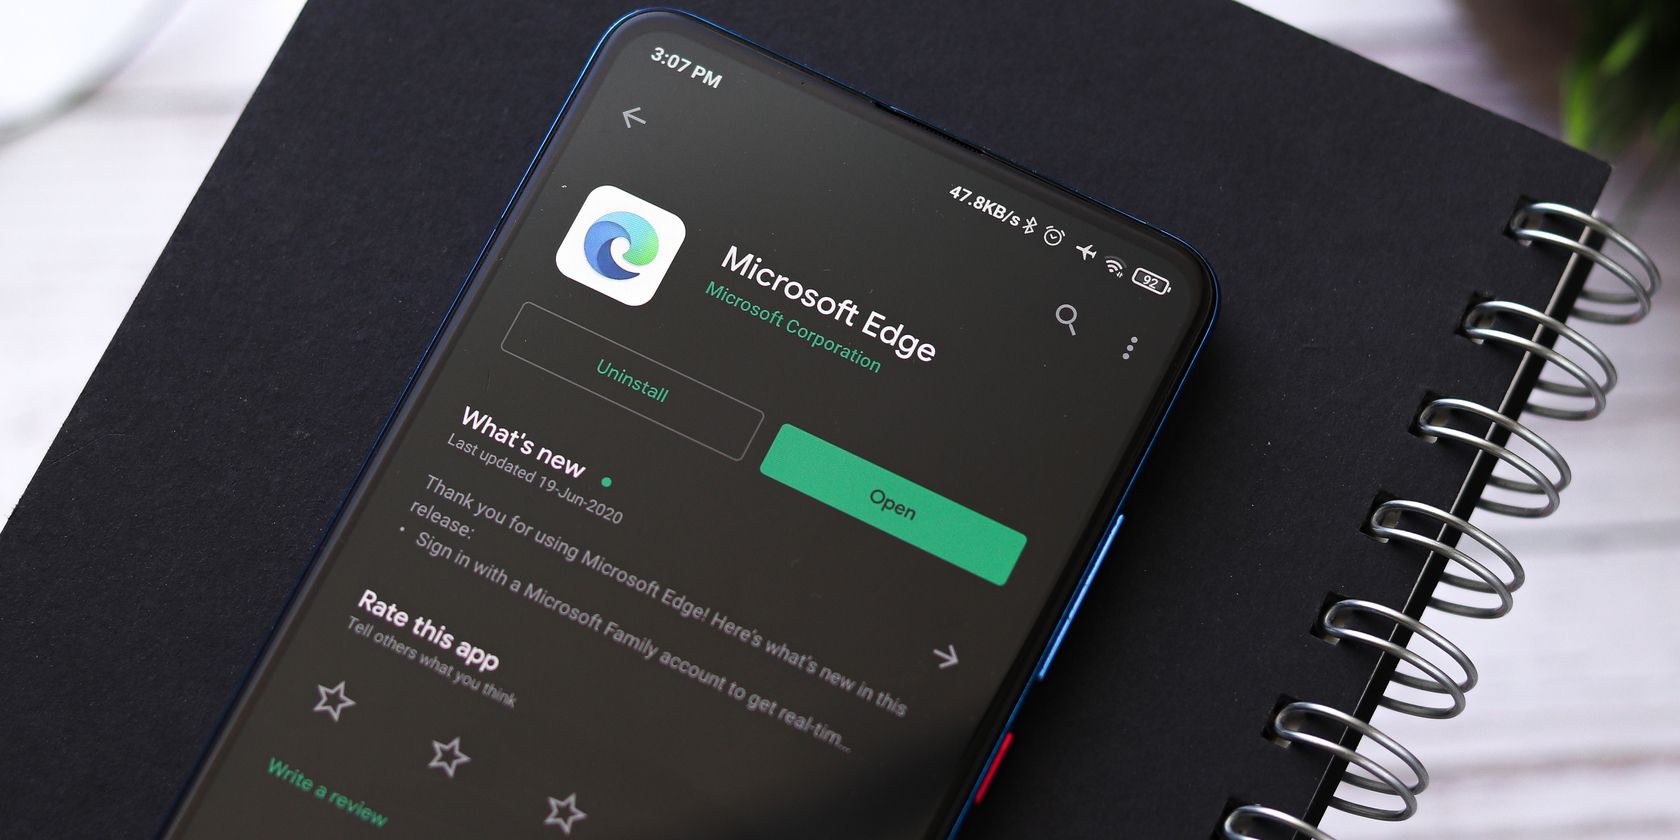 Microsoft Edge on Mobile